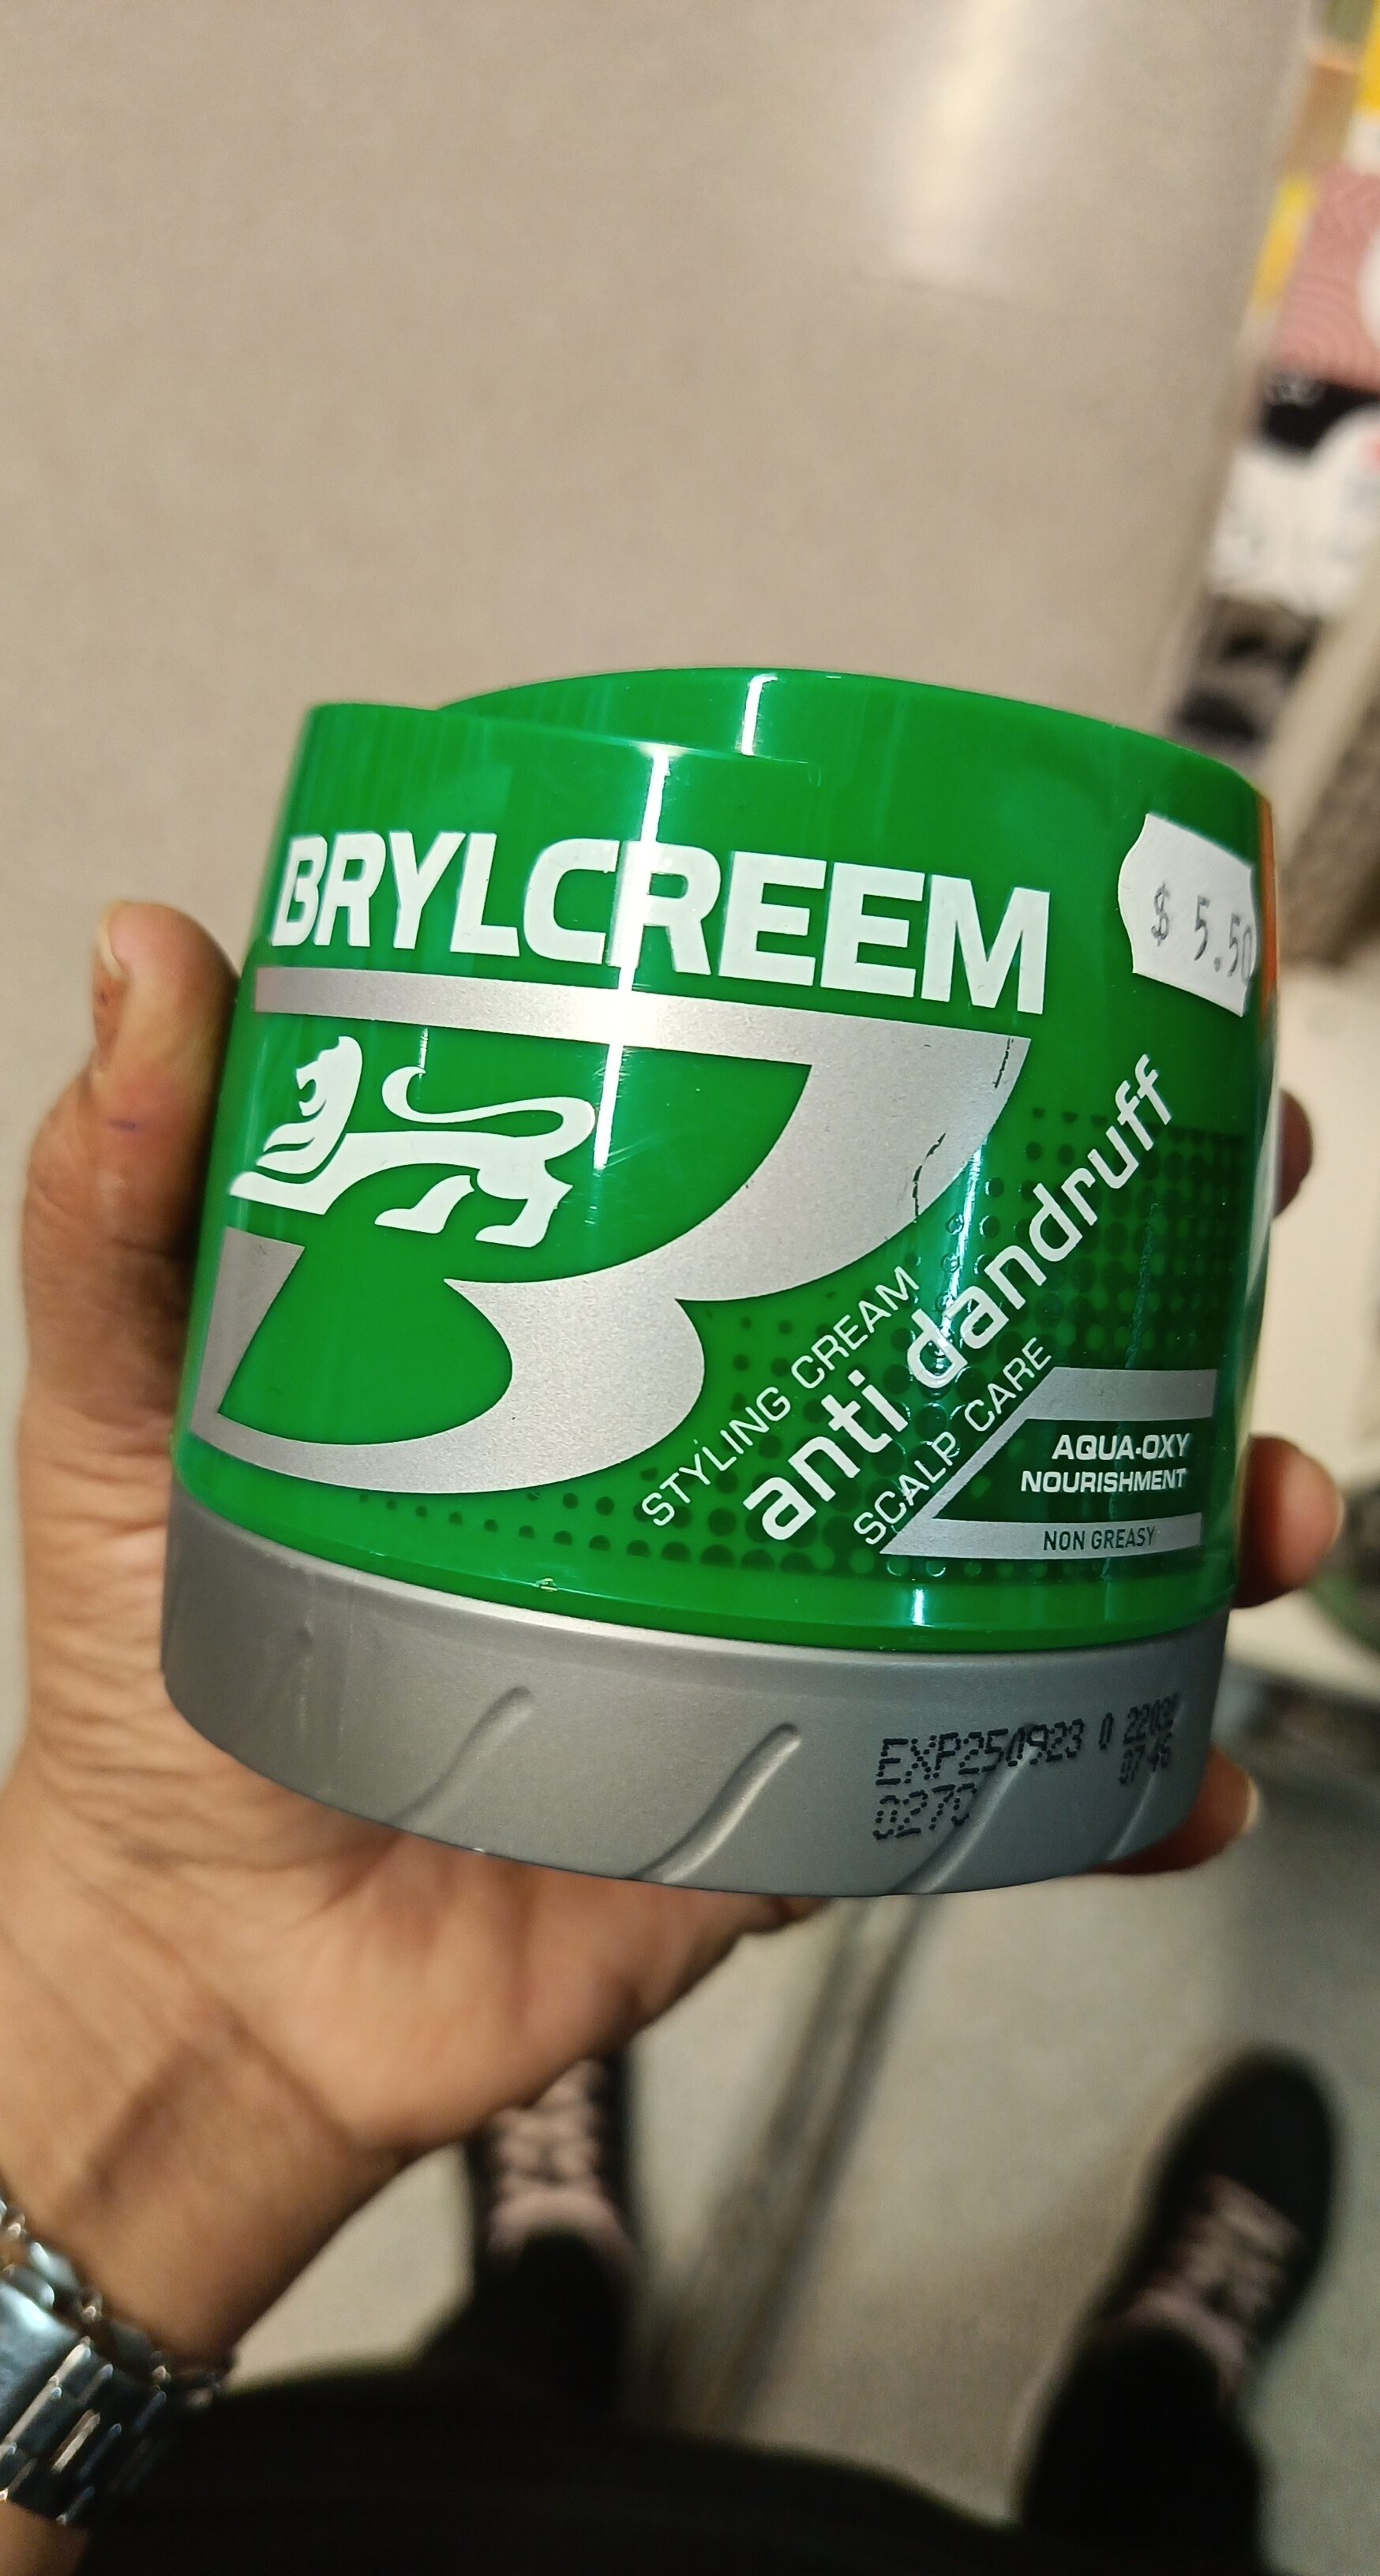 Brylcreem anti dandruff - Product - en